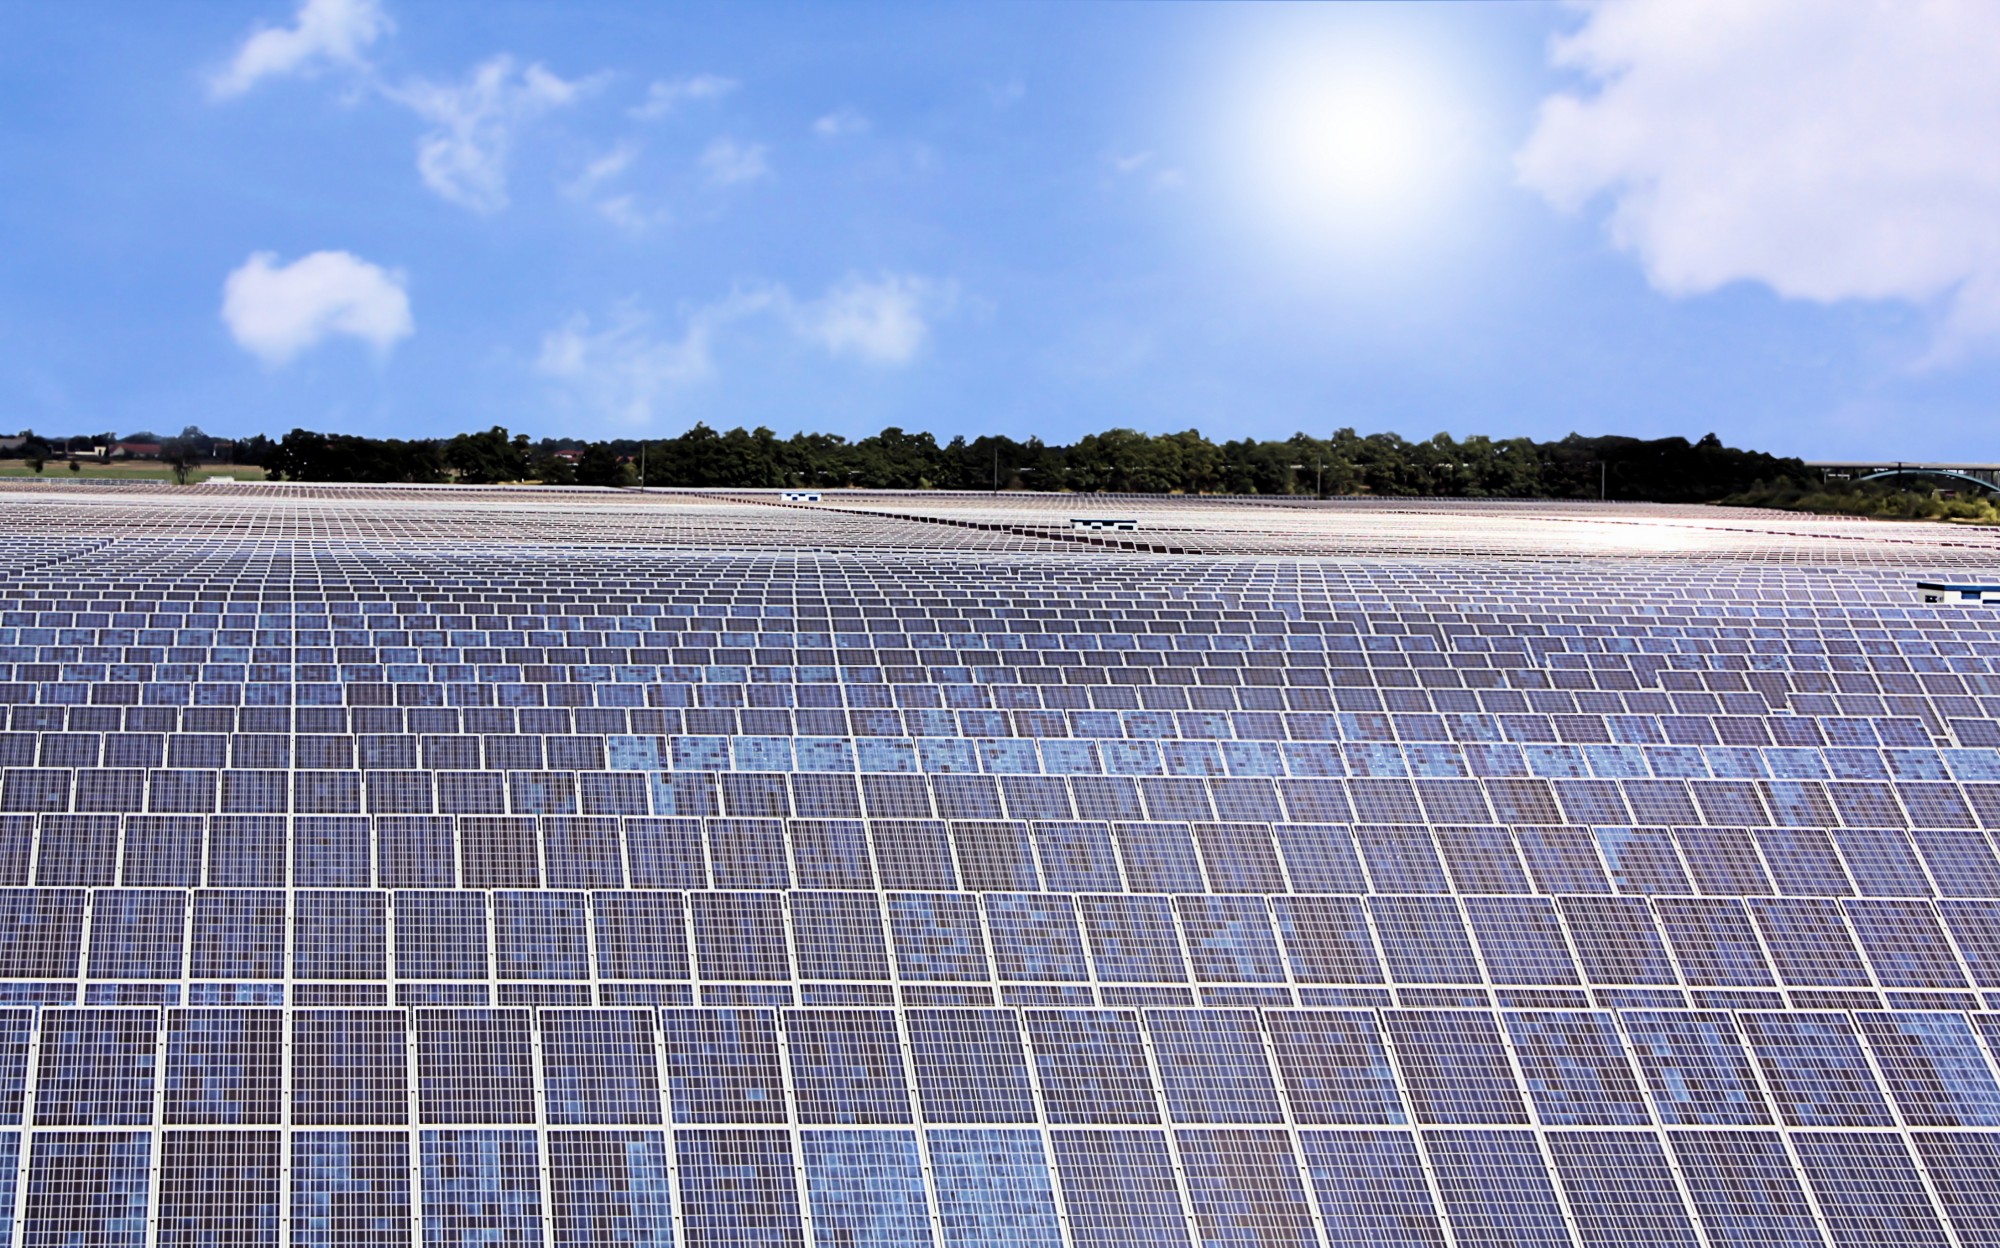 City of Somerville Deploys Solar